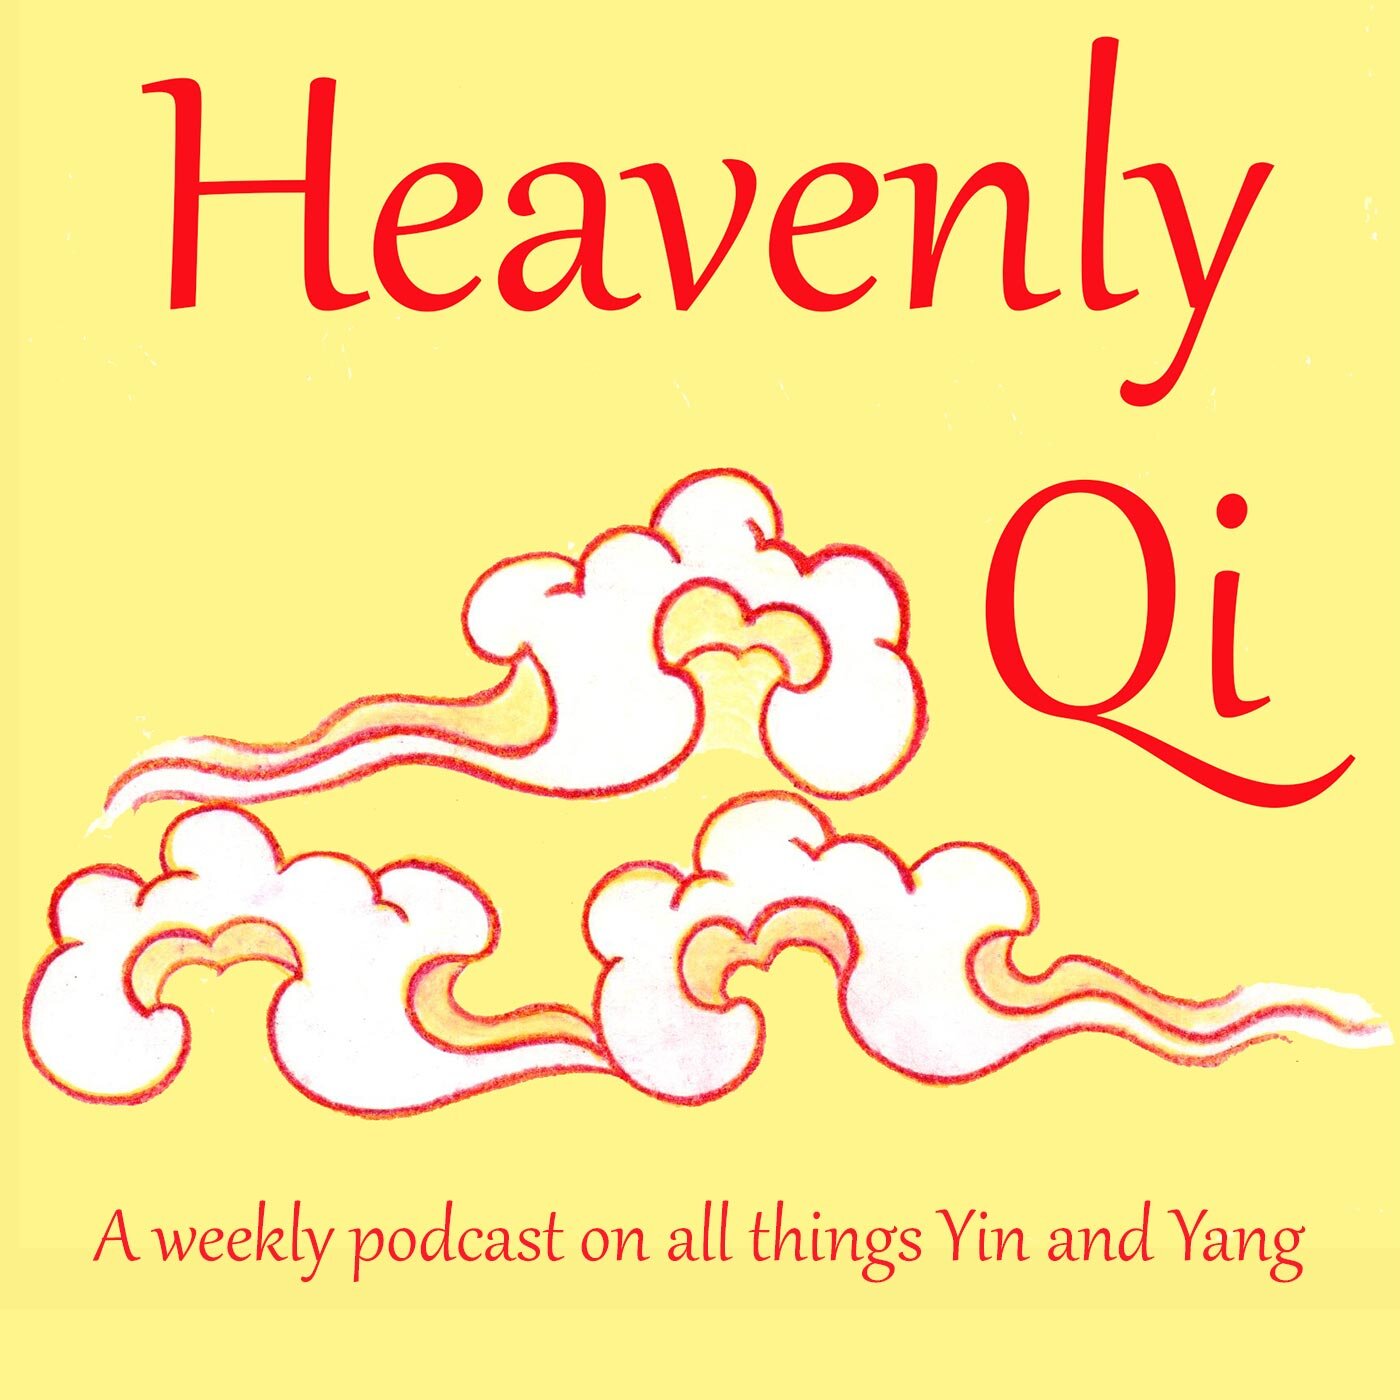 Heavenly Qi